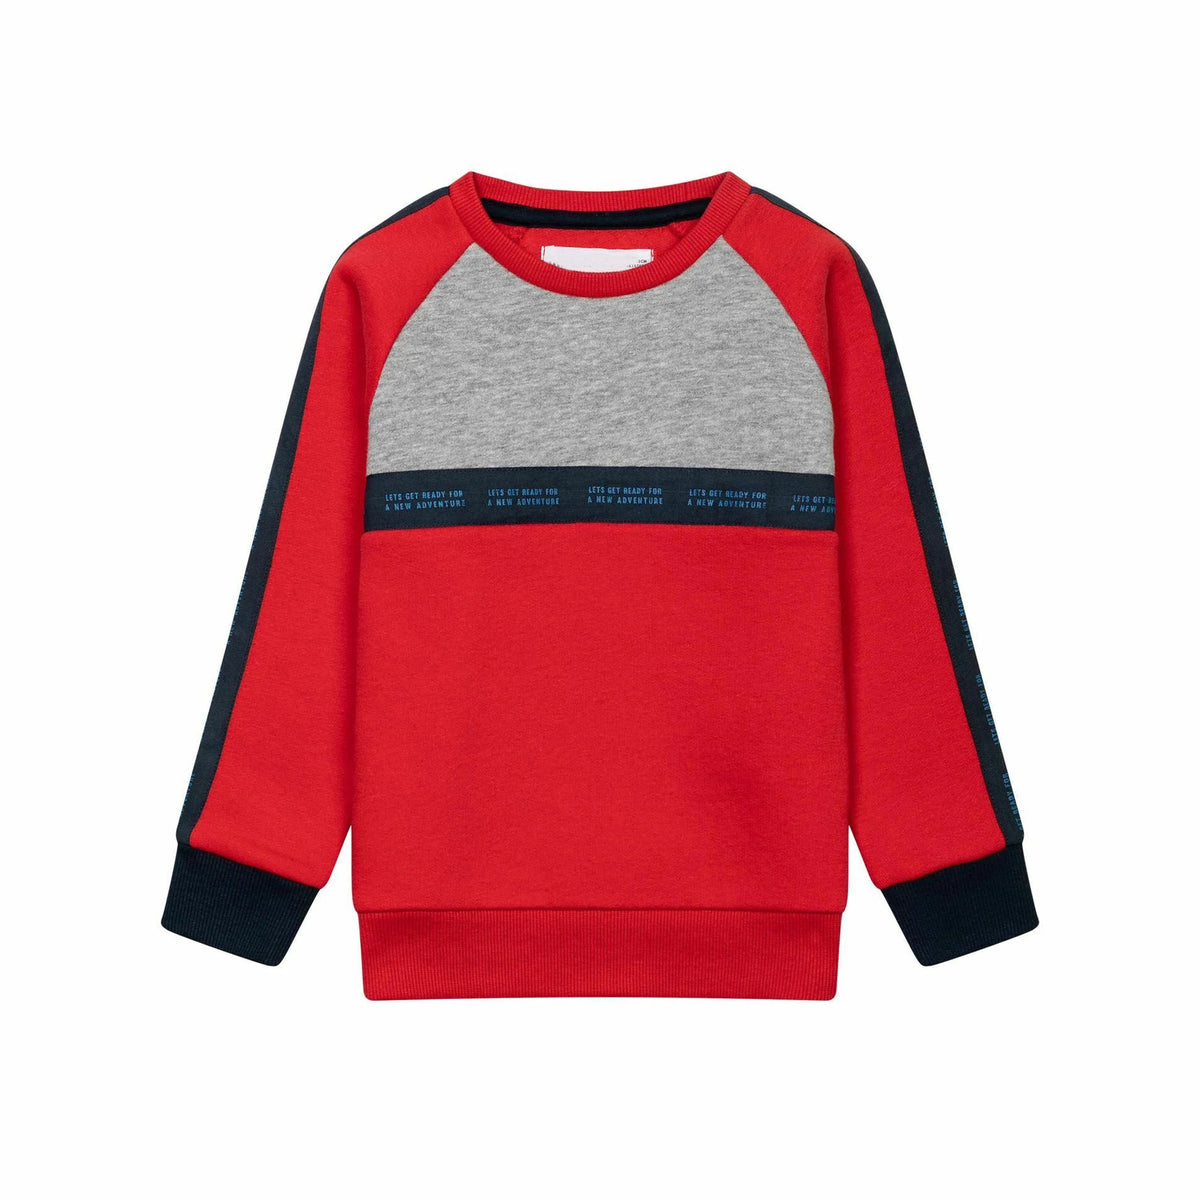 Premium Quality Canvas Printed Fleece Red Sweatshirt For Kids